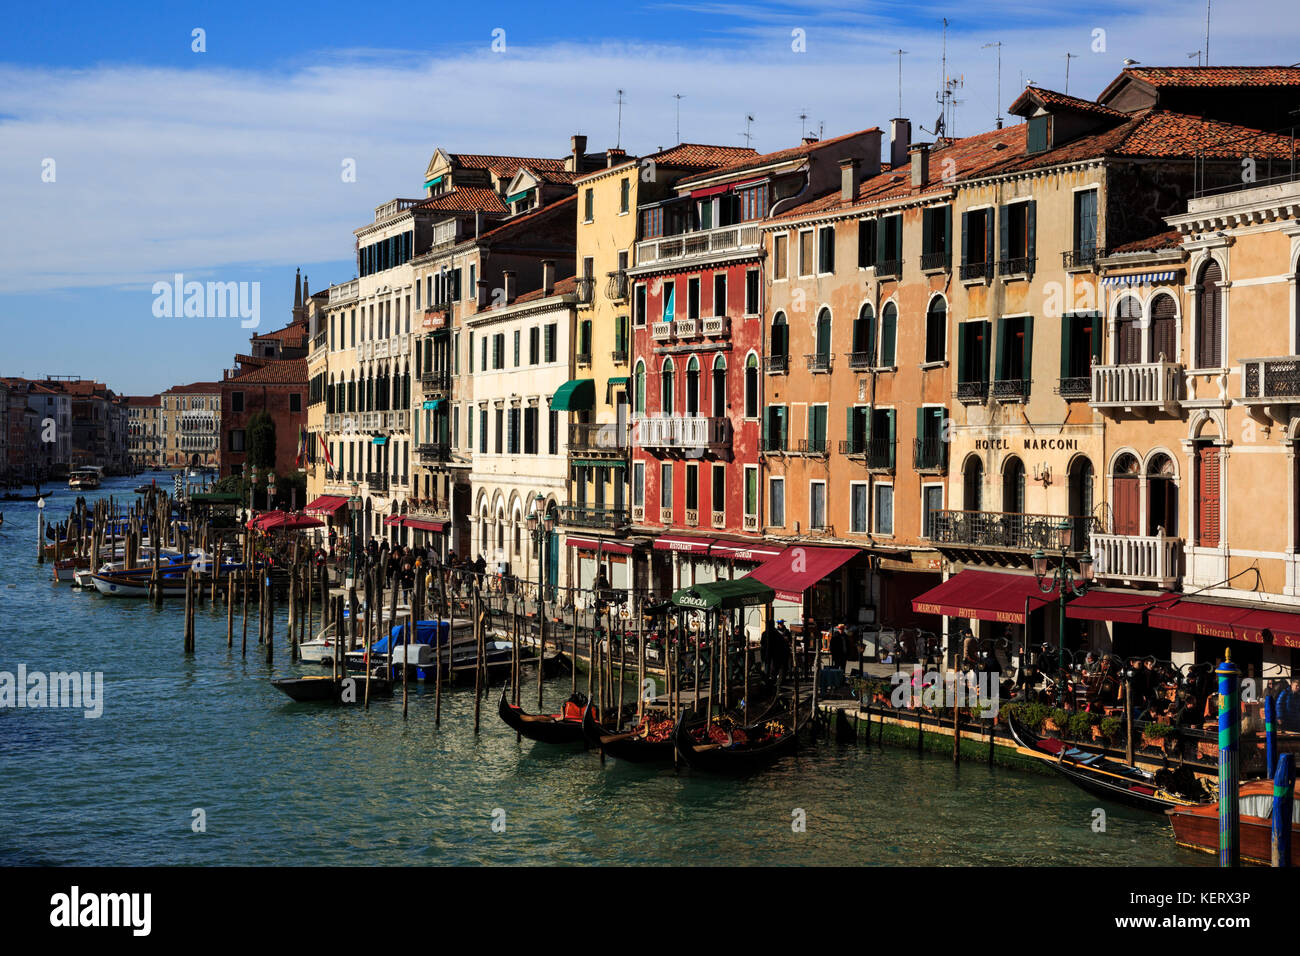 View of buildings, gondolas, boats and the Grand Canal, Canal Grande, from Rialto Bridge, Venice, Veneto, Italy Stock Photo